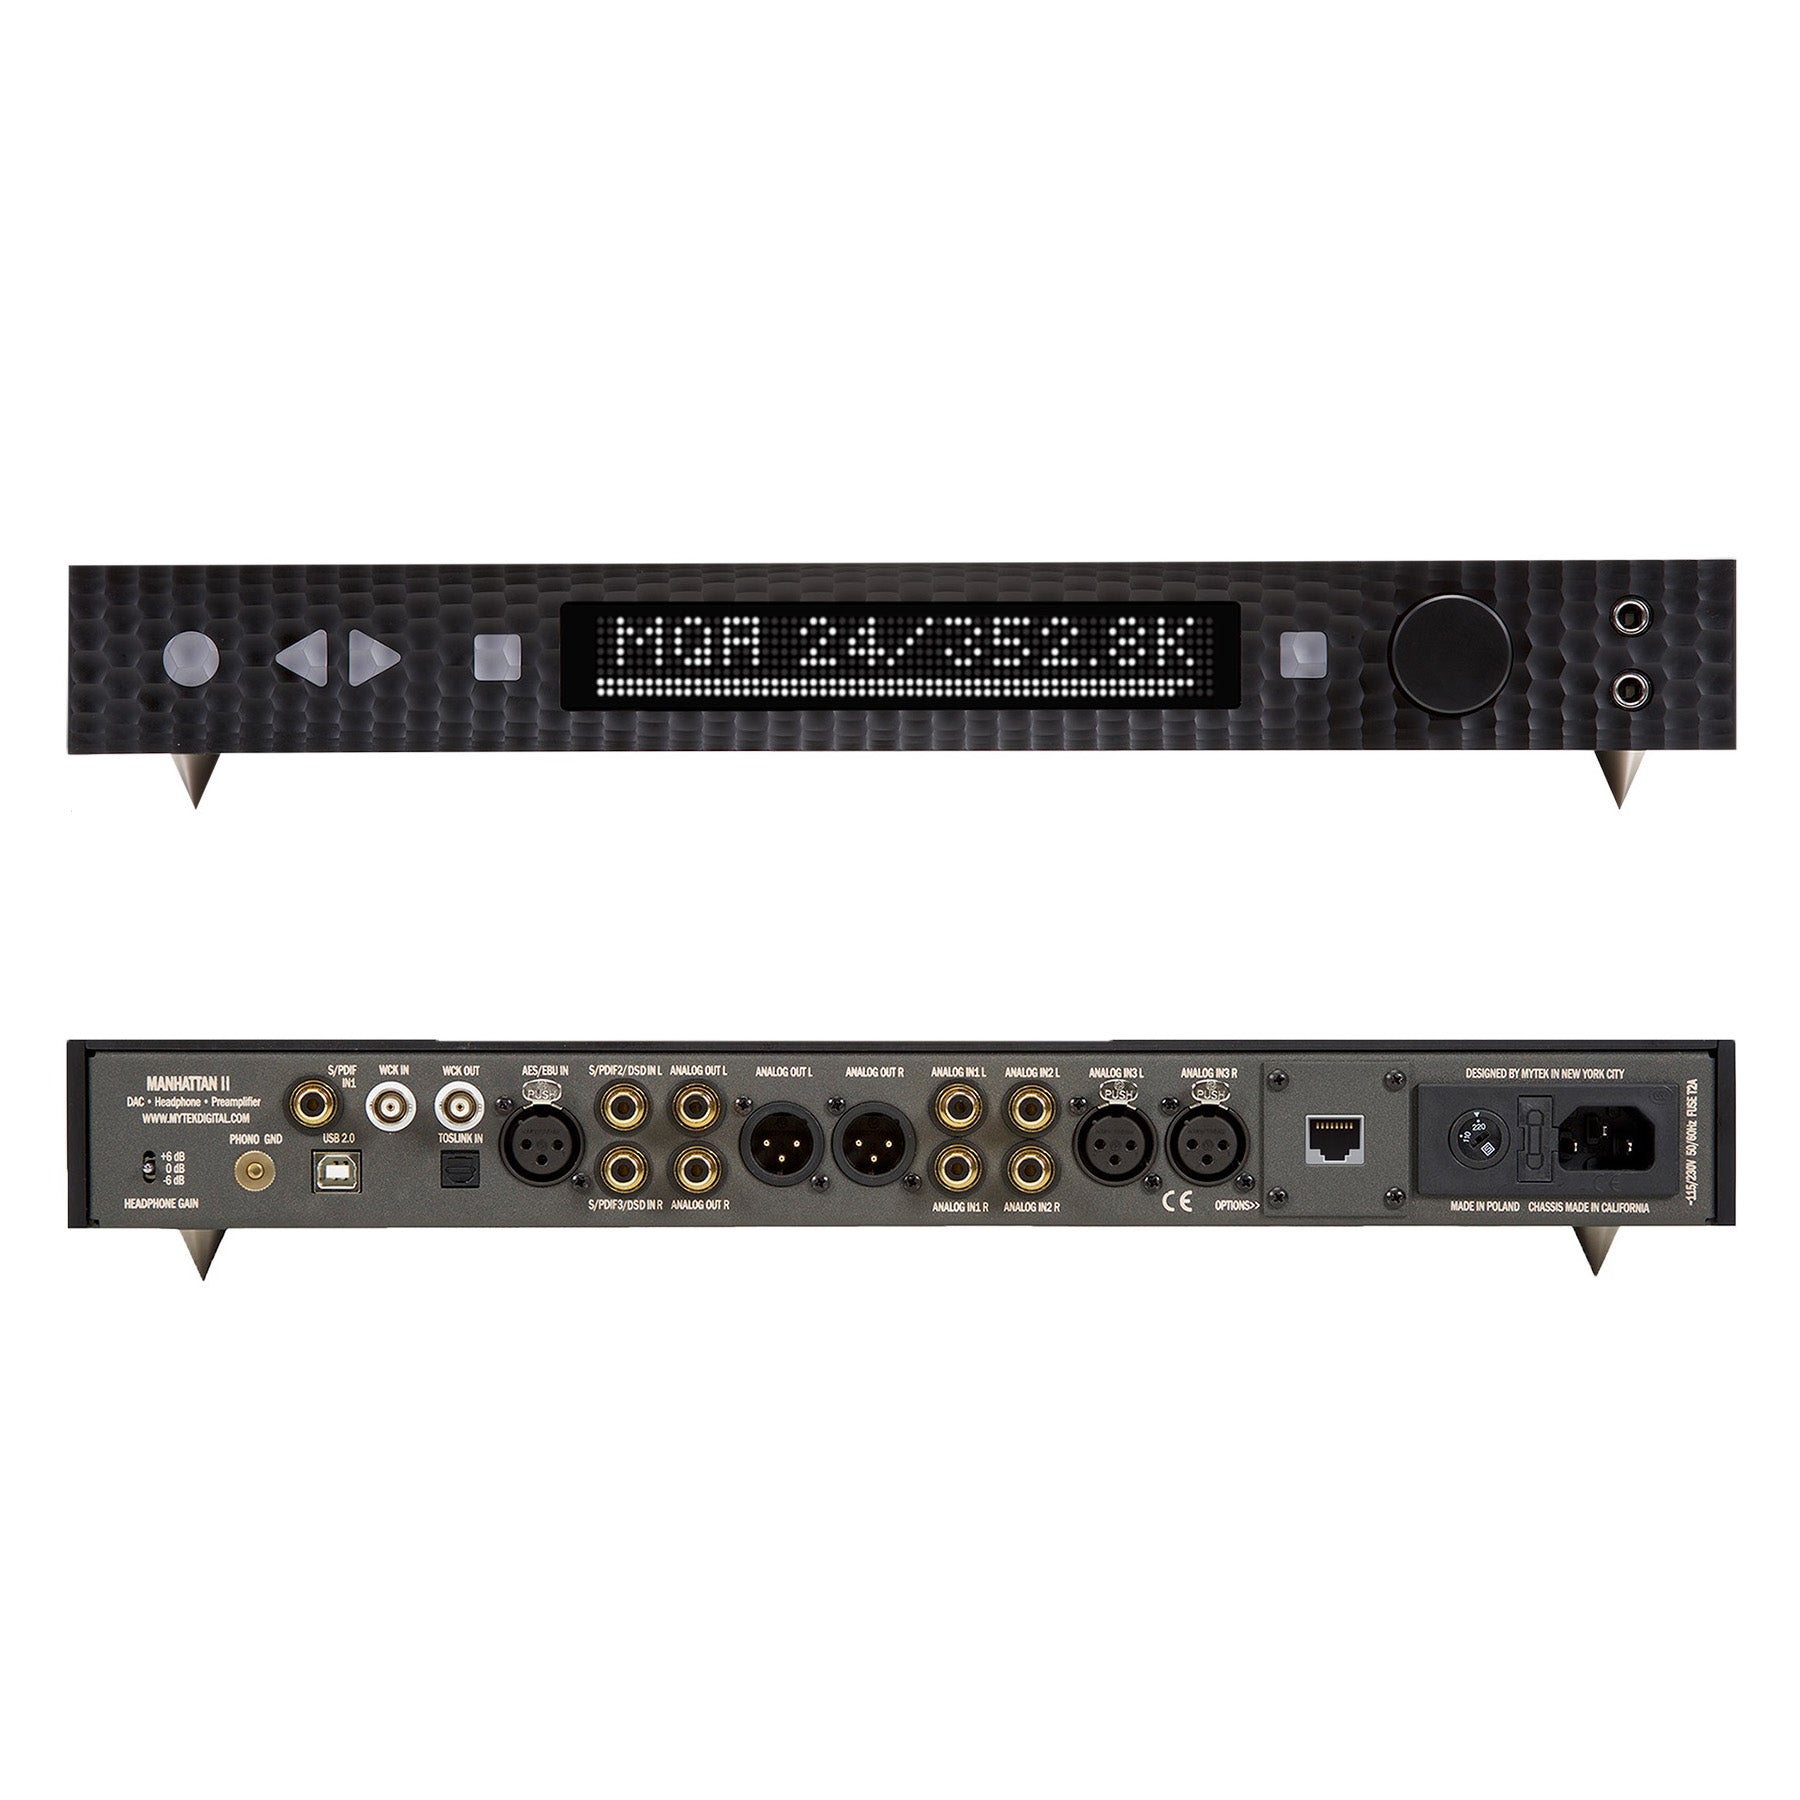 Trade-in Mytek Manhattan DAC II Ultra Resolution Preamplifier / DAC / Streamer / Headphone Amplifier - Gold